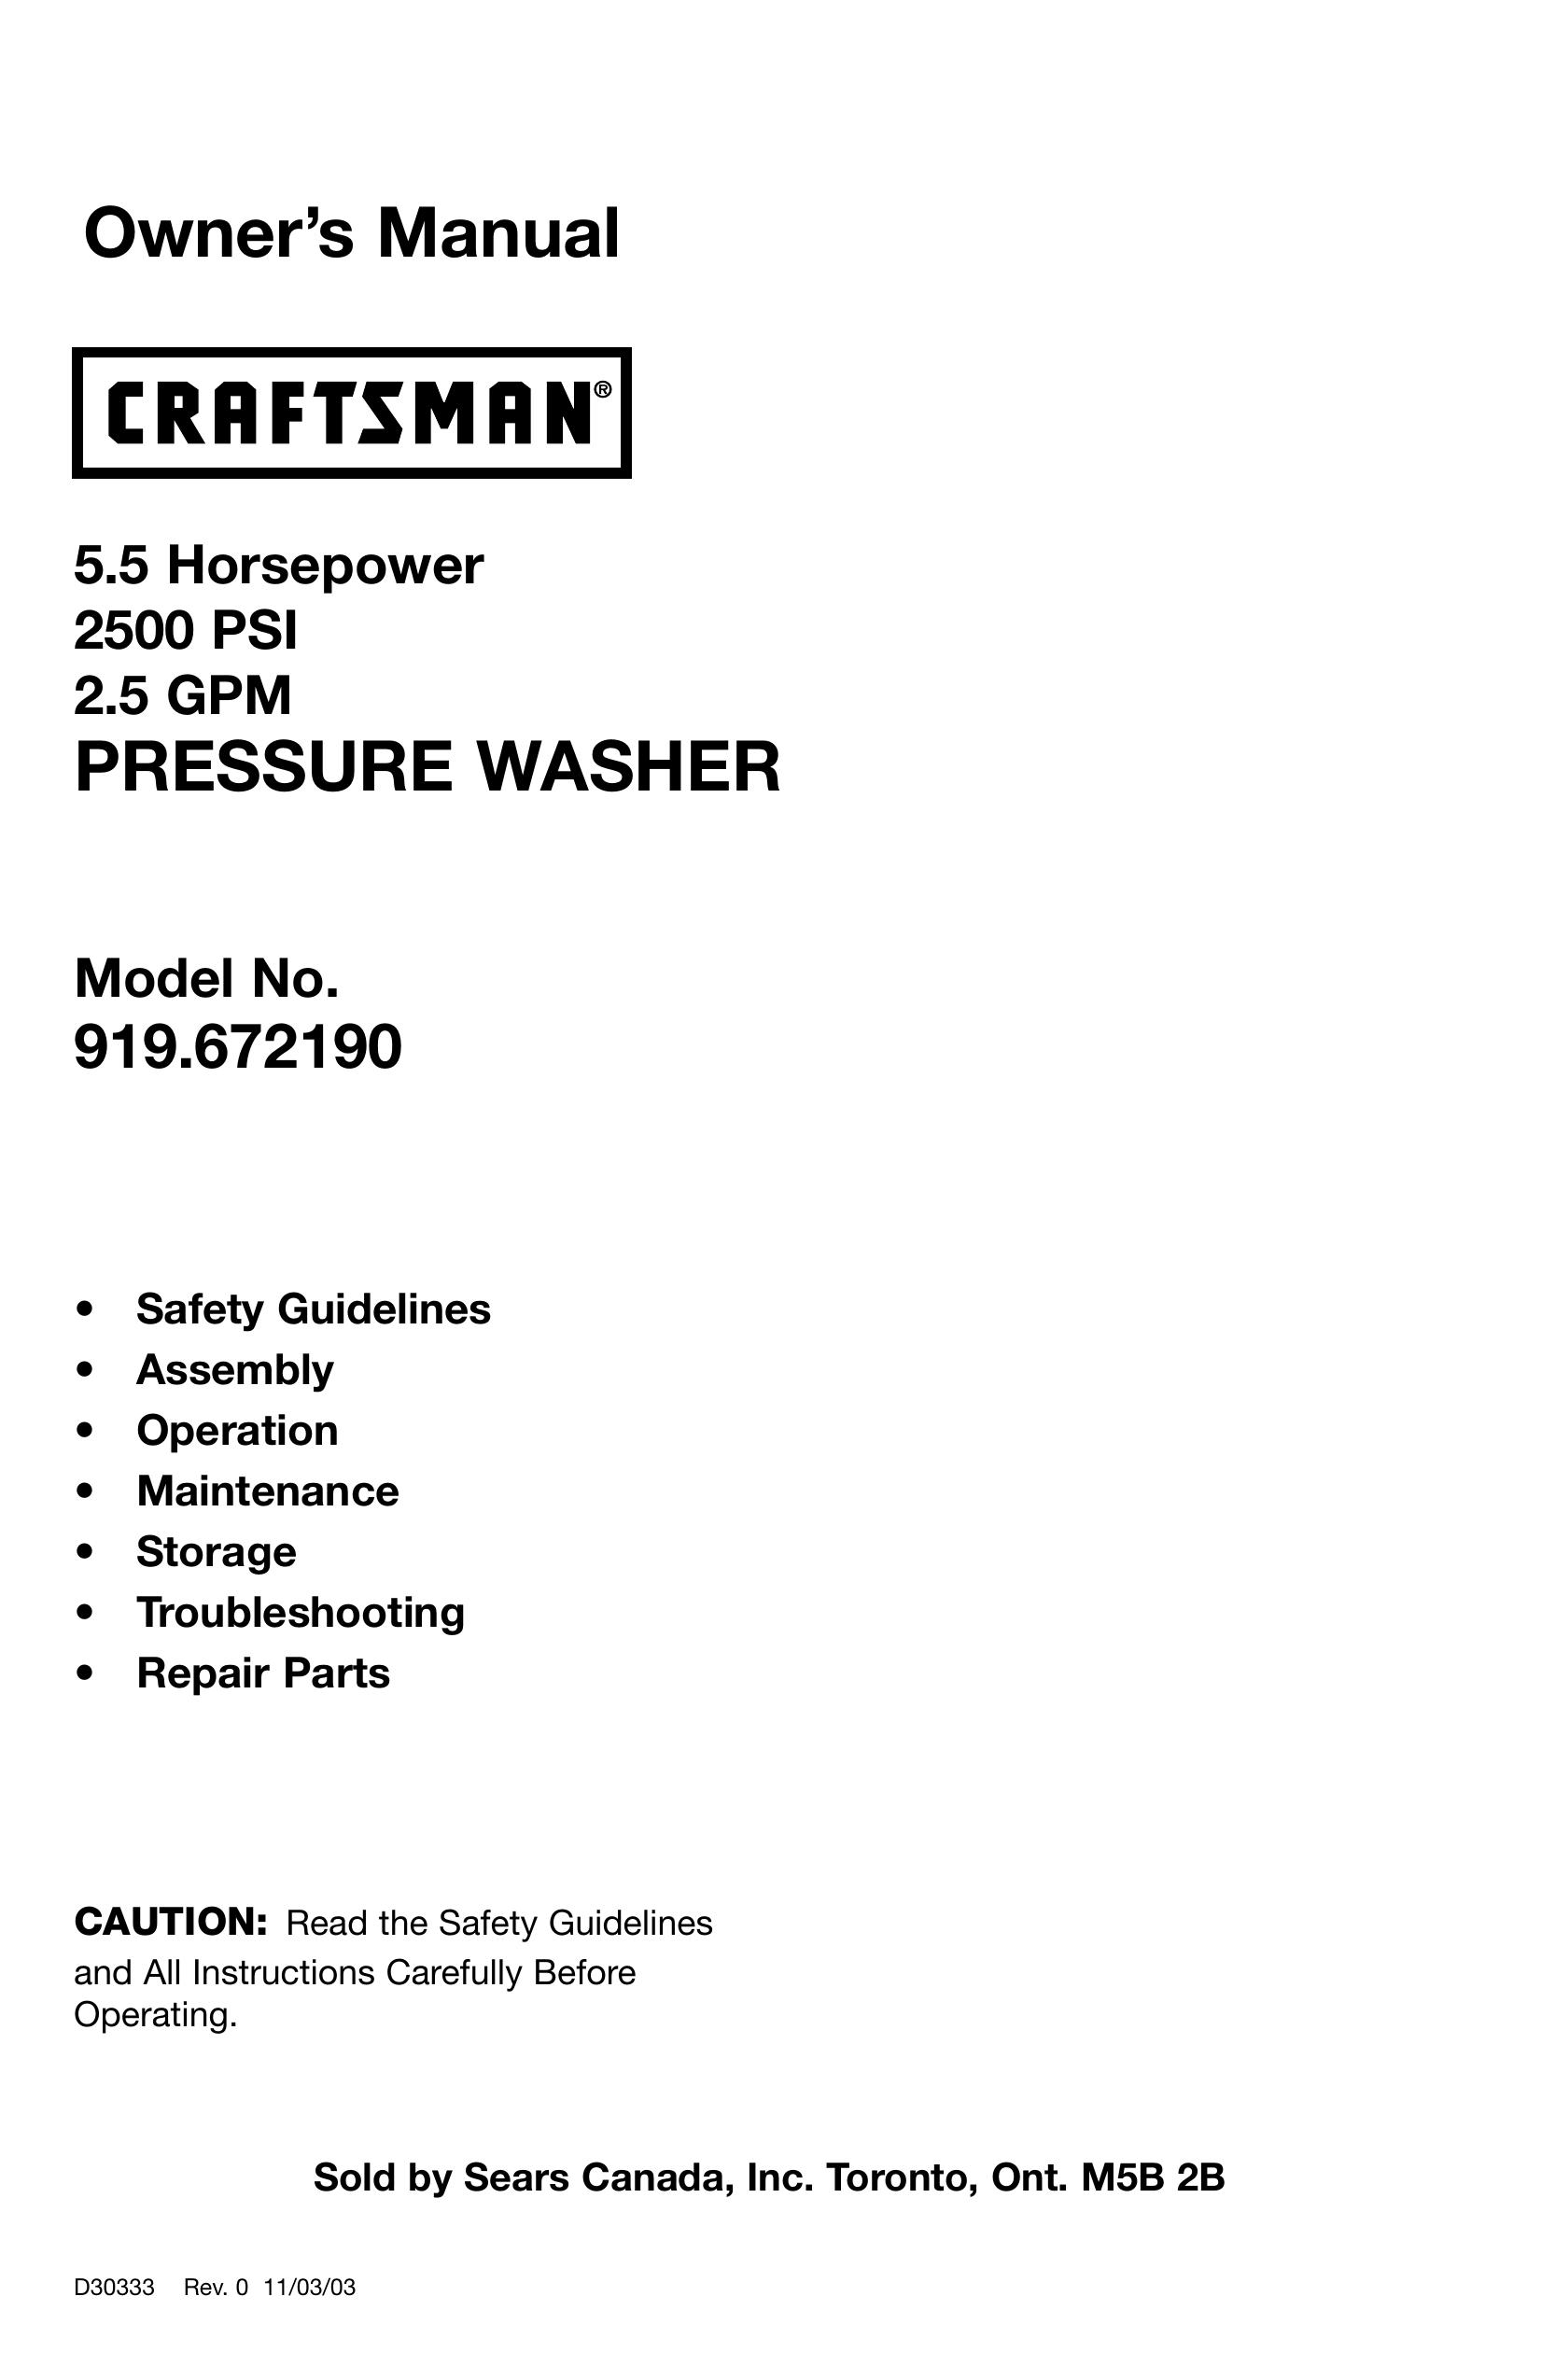 Craftsman 919.672190 Pressure Washer User Manual